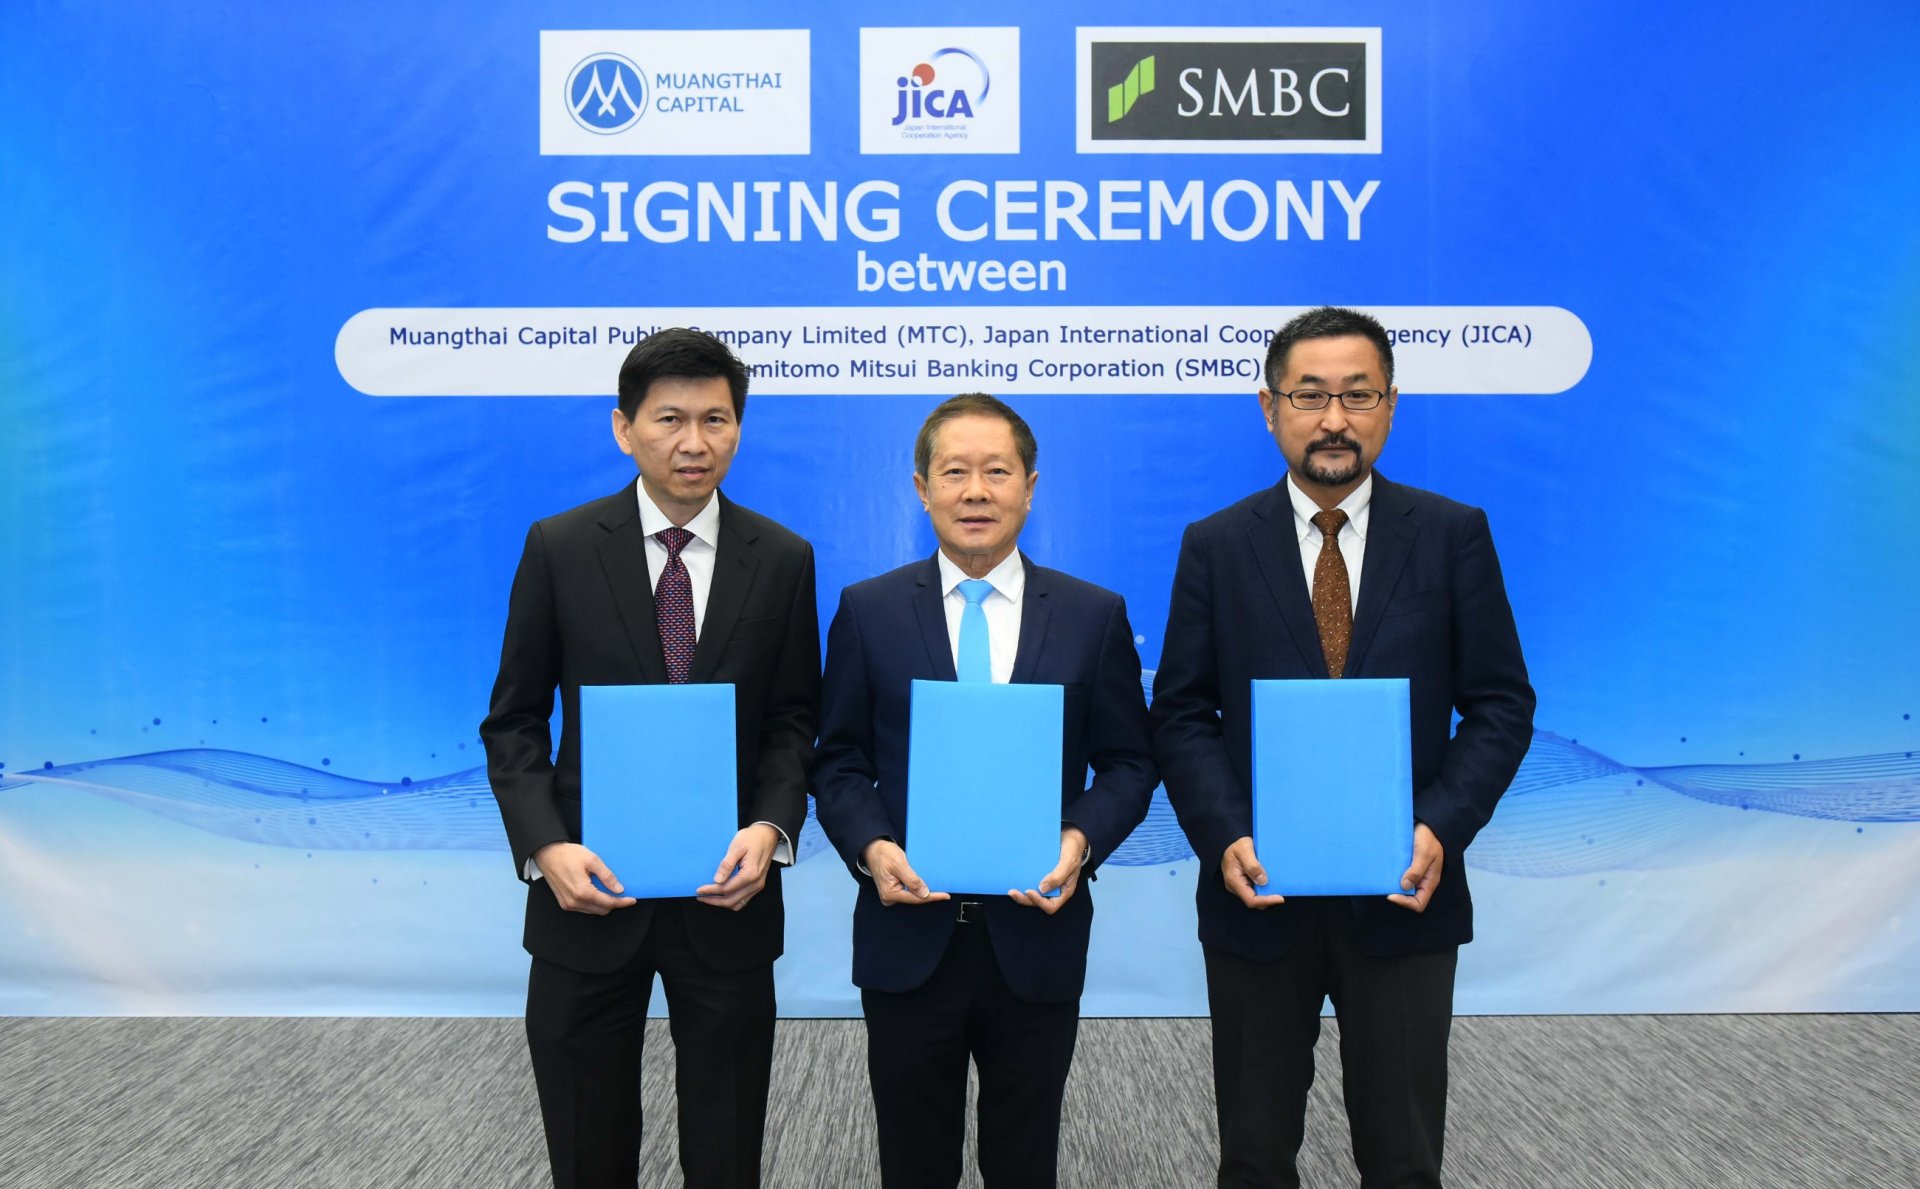 JICA และ SMBC ร่วมปล่อยสินเชื่อให้ MTC 6,200 ล้านบาท เพิ่มโอกาสลูกค้าฐานรากเข้าถึงแหล่งเงินทุน หนุนเติบโตยั่งยืนคู่สังคมไทย